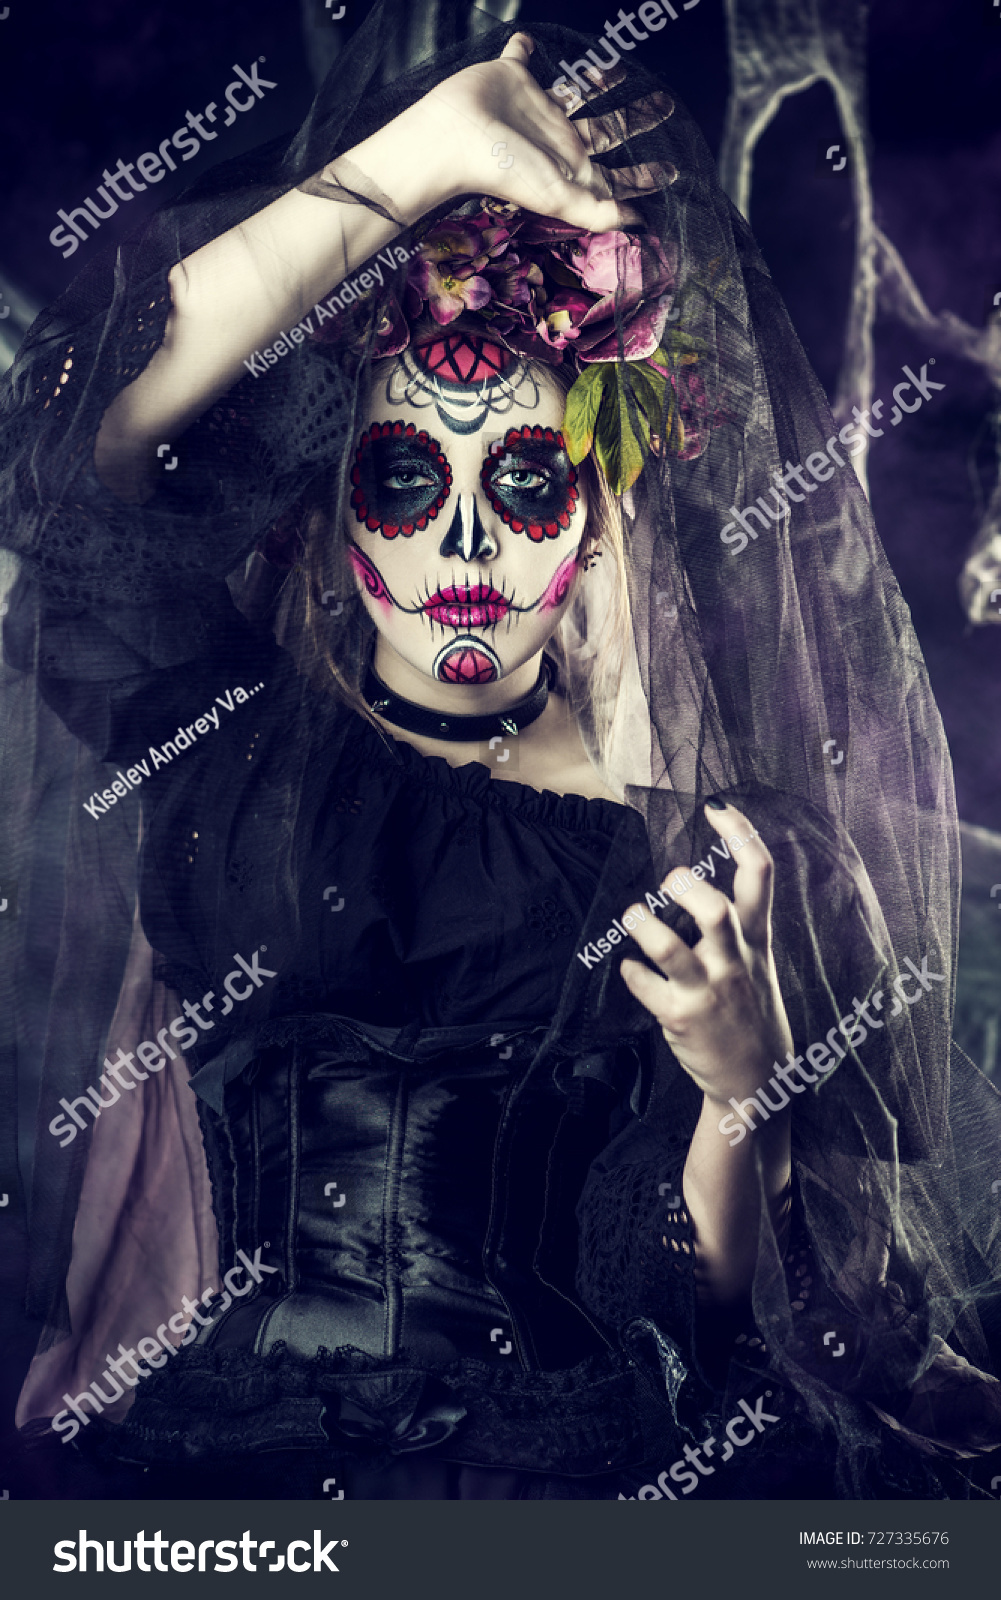 D de Muertos Masquerade Sugar Skull Mask Day of the Dead Event Make up Party 